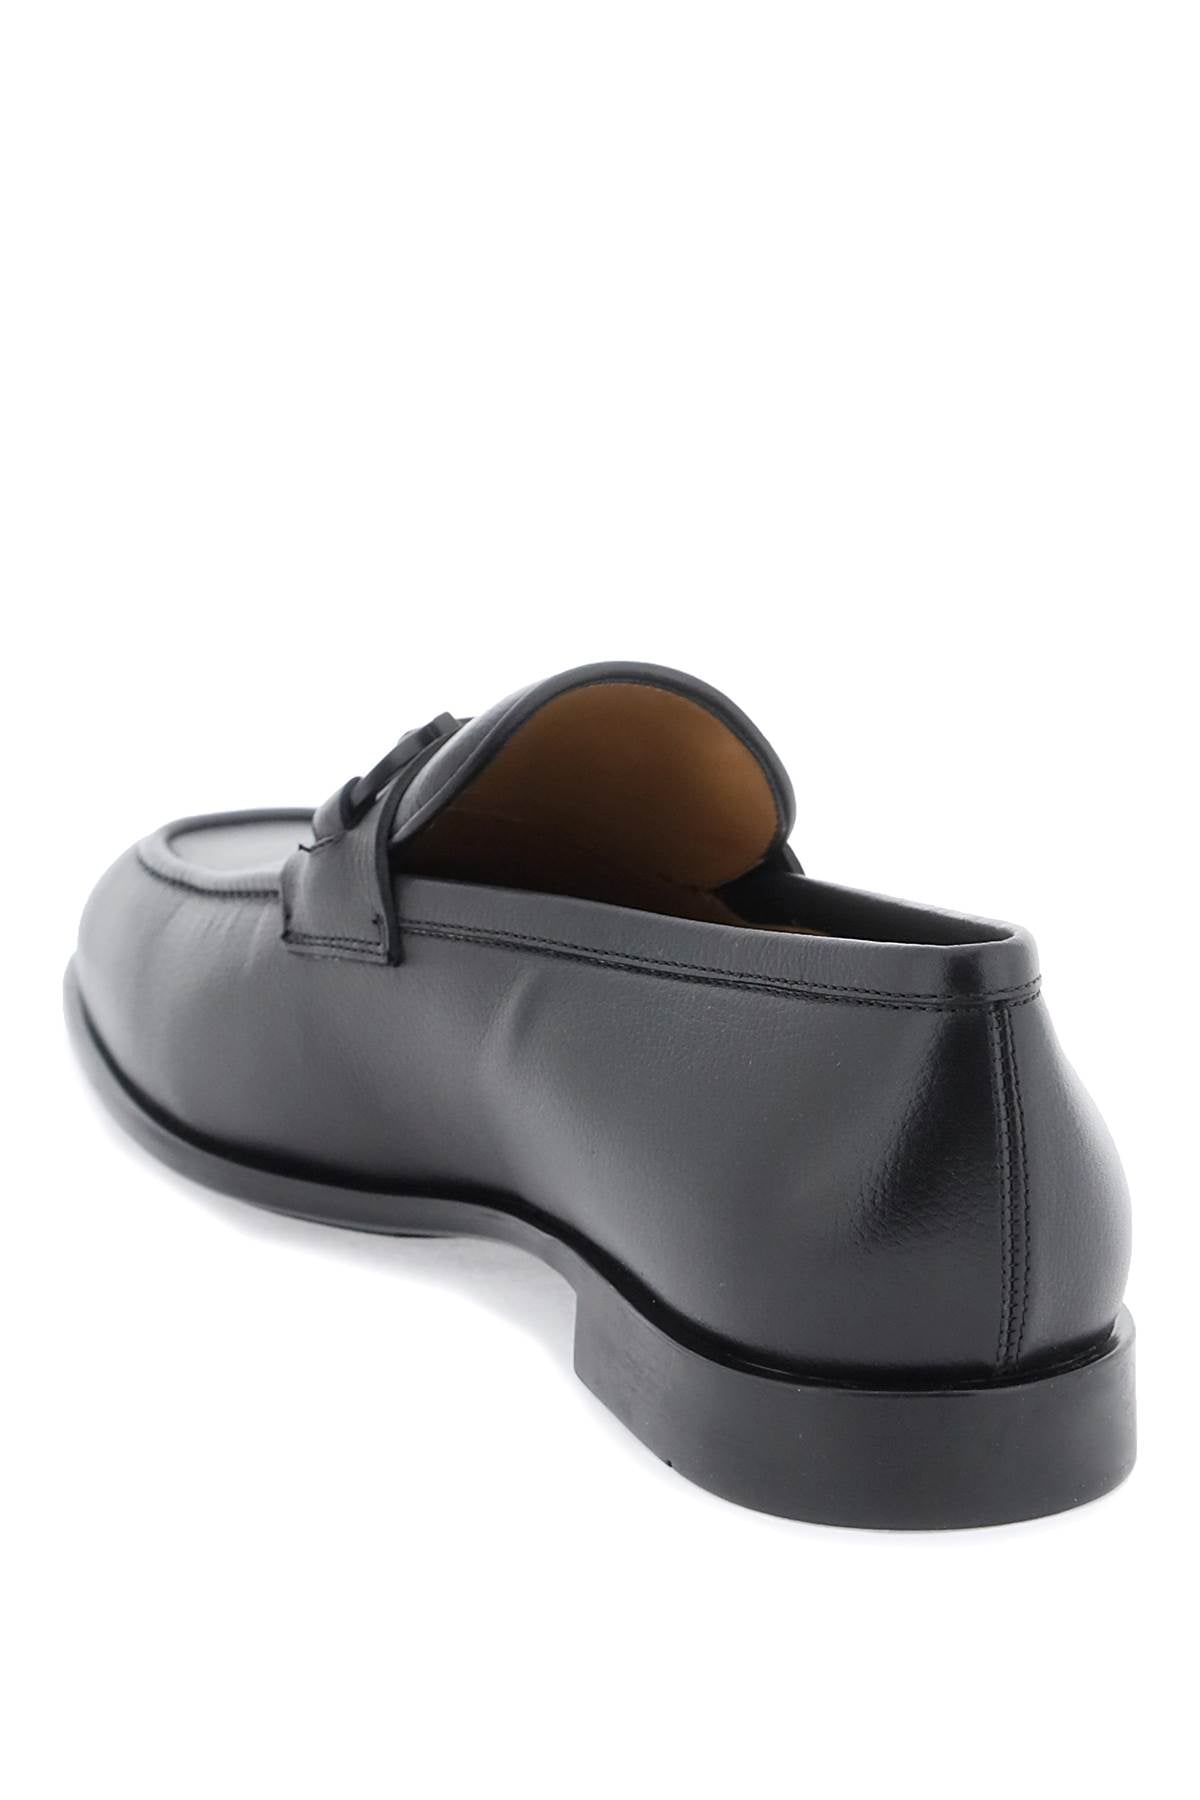 FERRAGAMO Gancini Hook Loafers in Black Grained Leather for Men